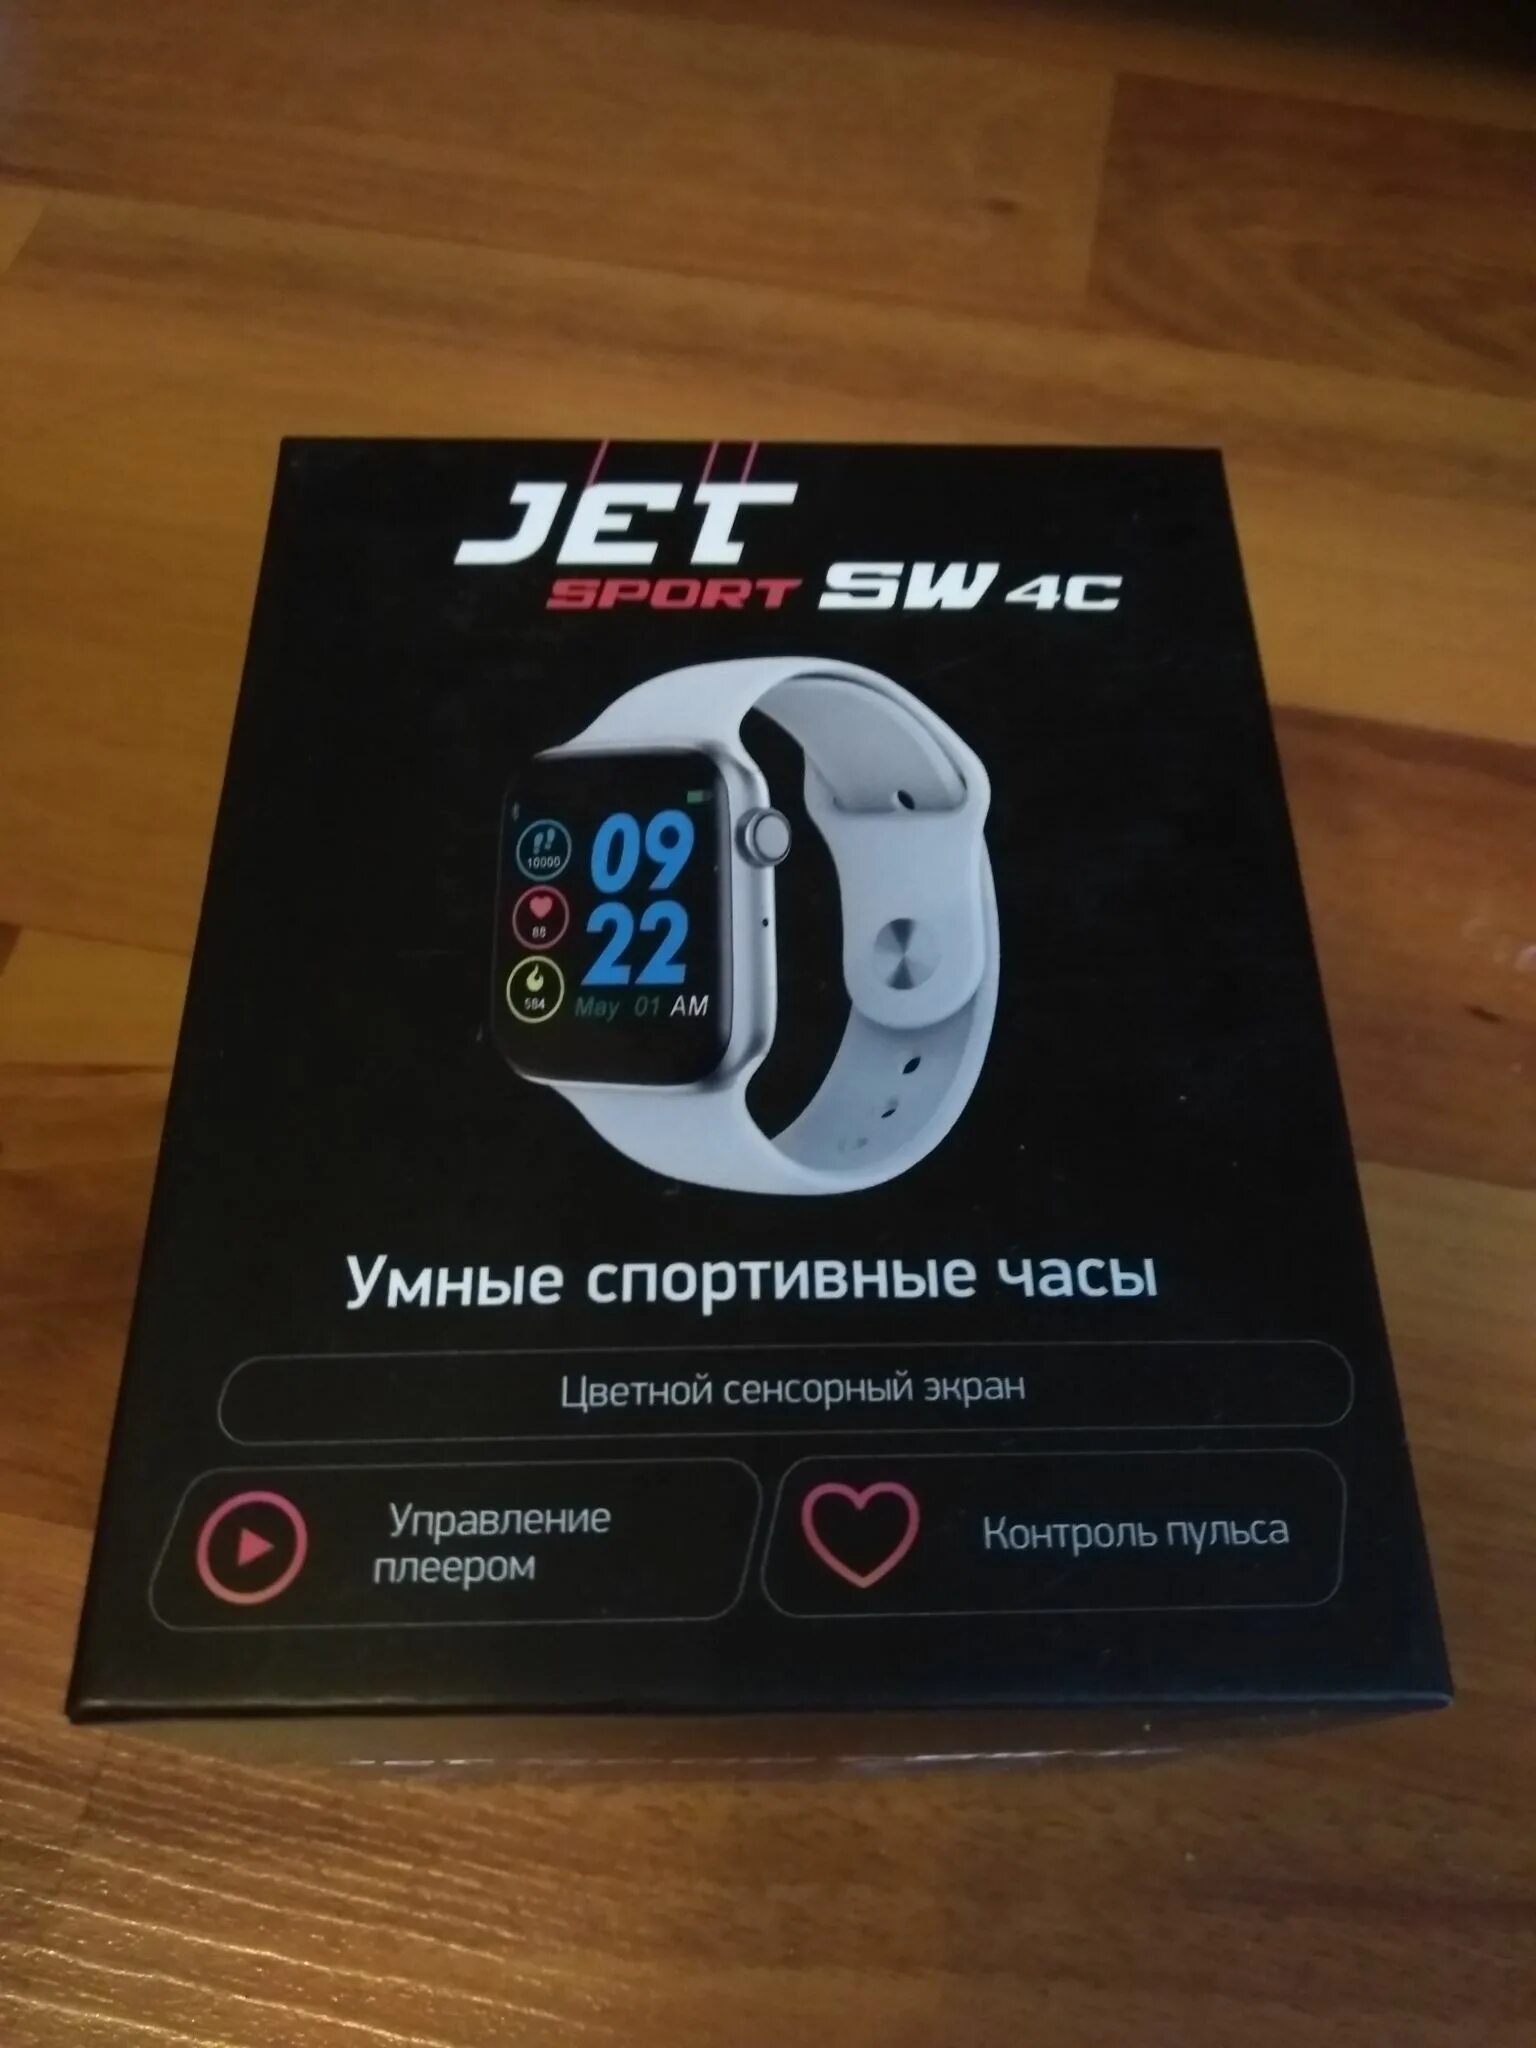 Jet Sport SW-4c. Смарт Jet Sport sw4. Спортивные часы Jet Sport SW-4c. Jet Sport SW-4c Silver. Часы jet sport 4c